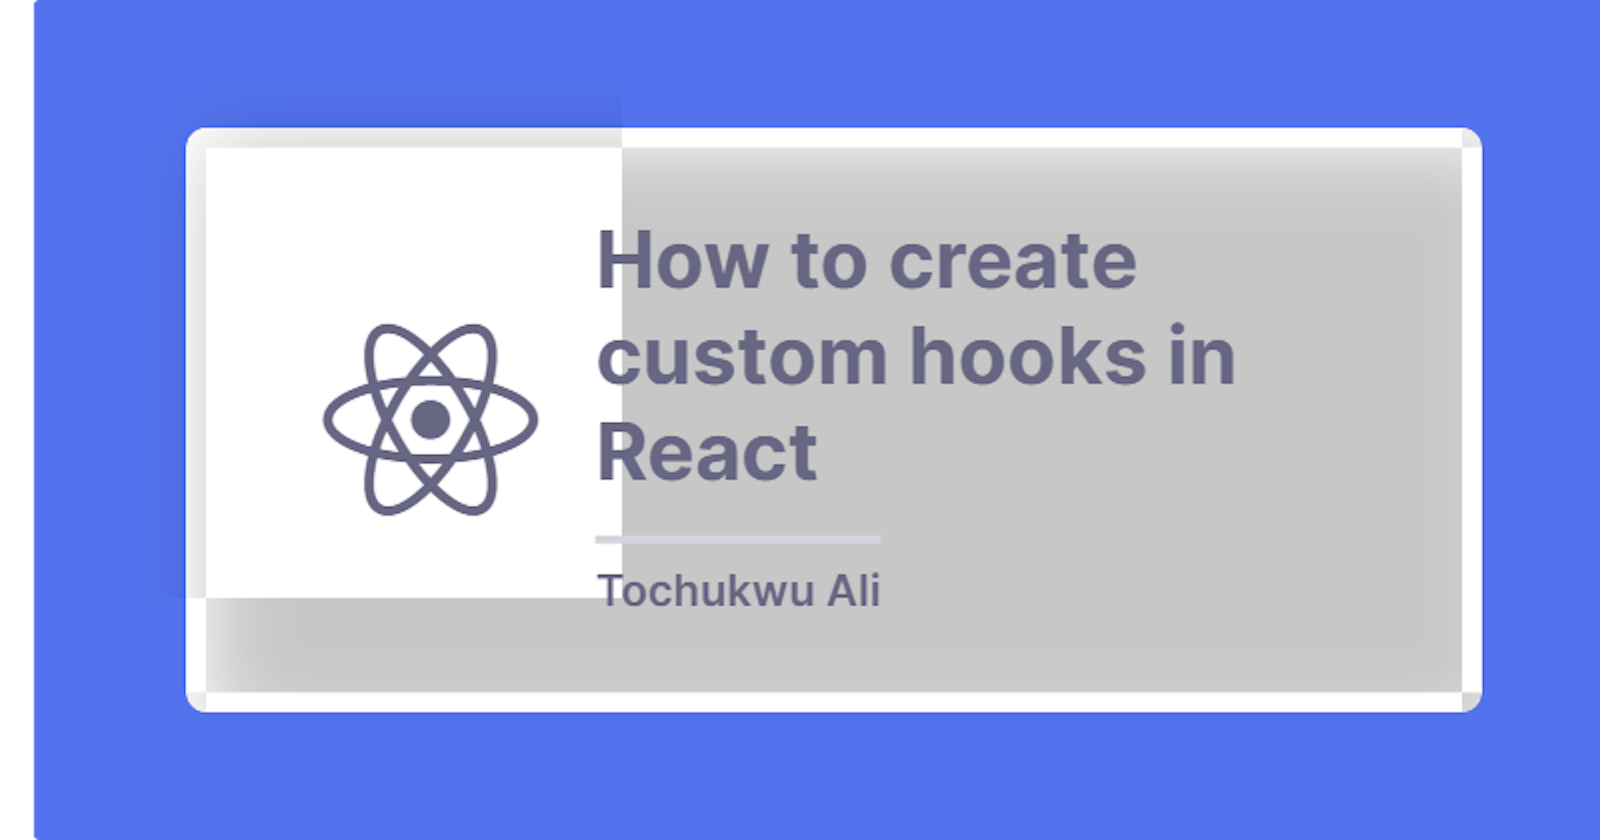 How to create custom hooks in React